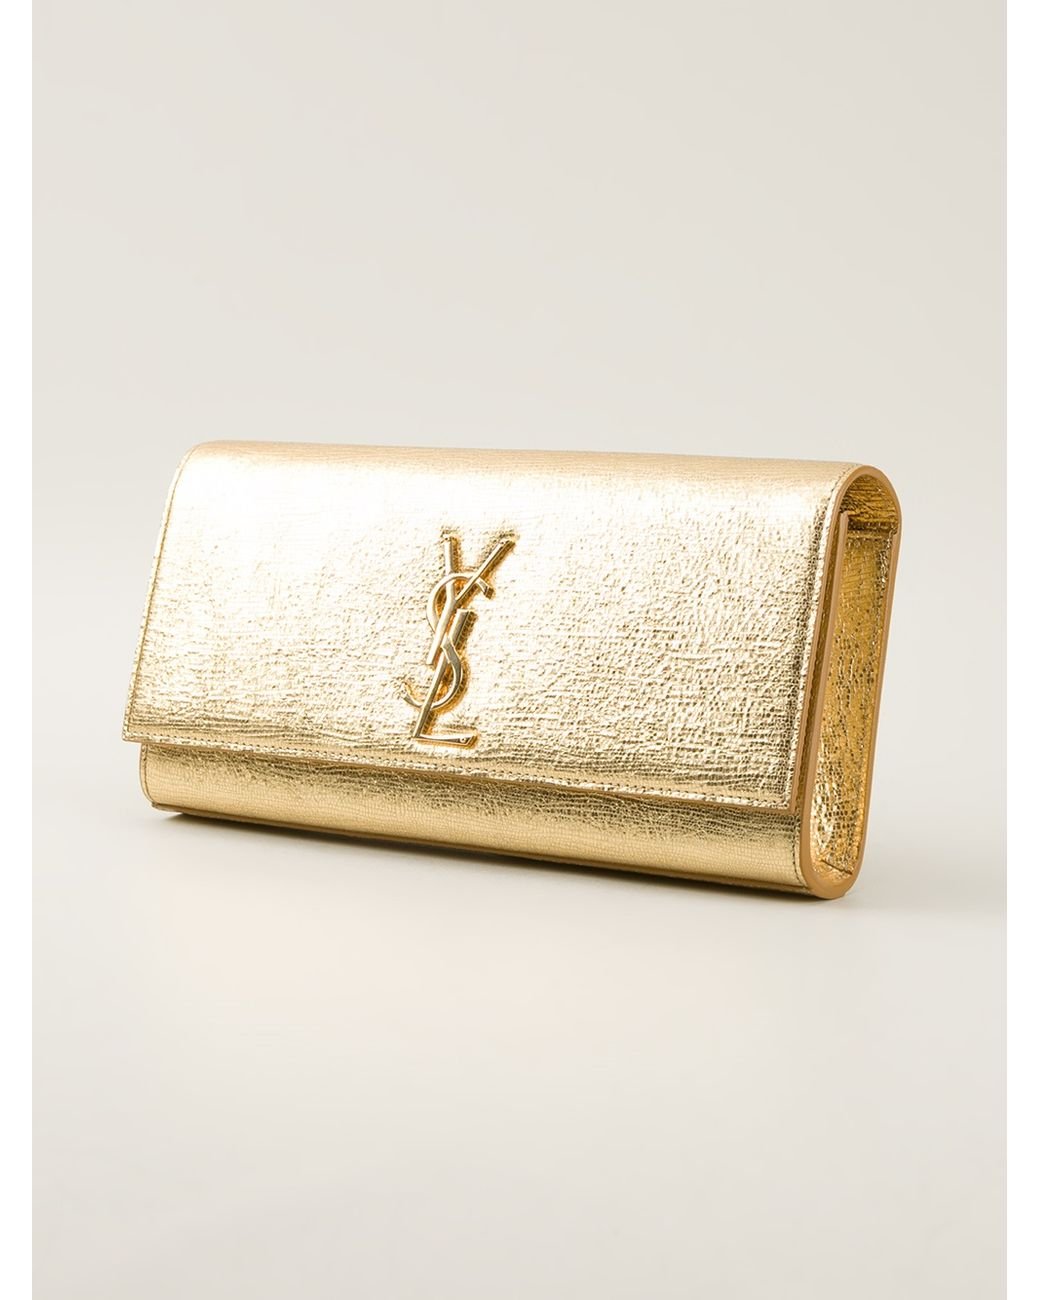 Gold YSL Purse  Bags, Purses and handbags, Gold clutch purse